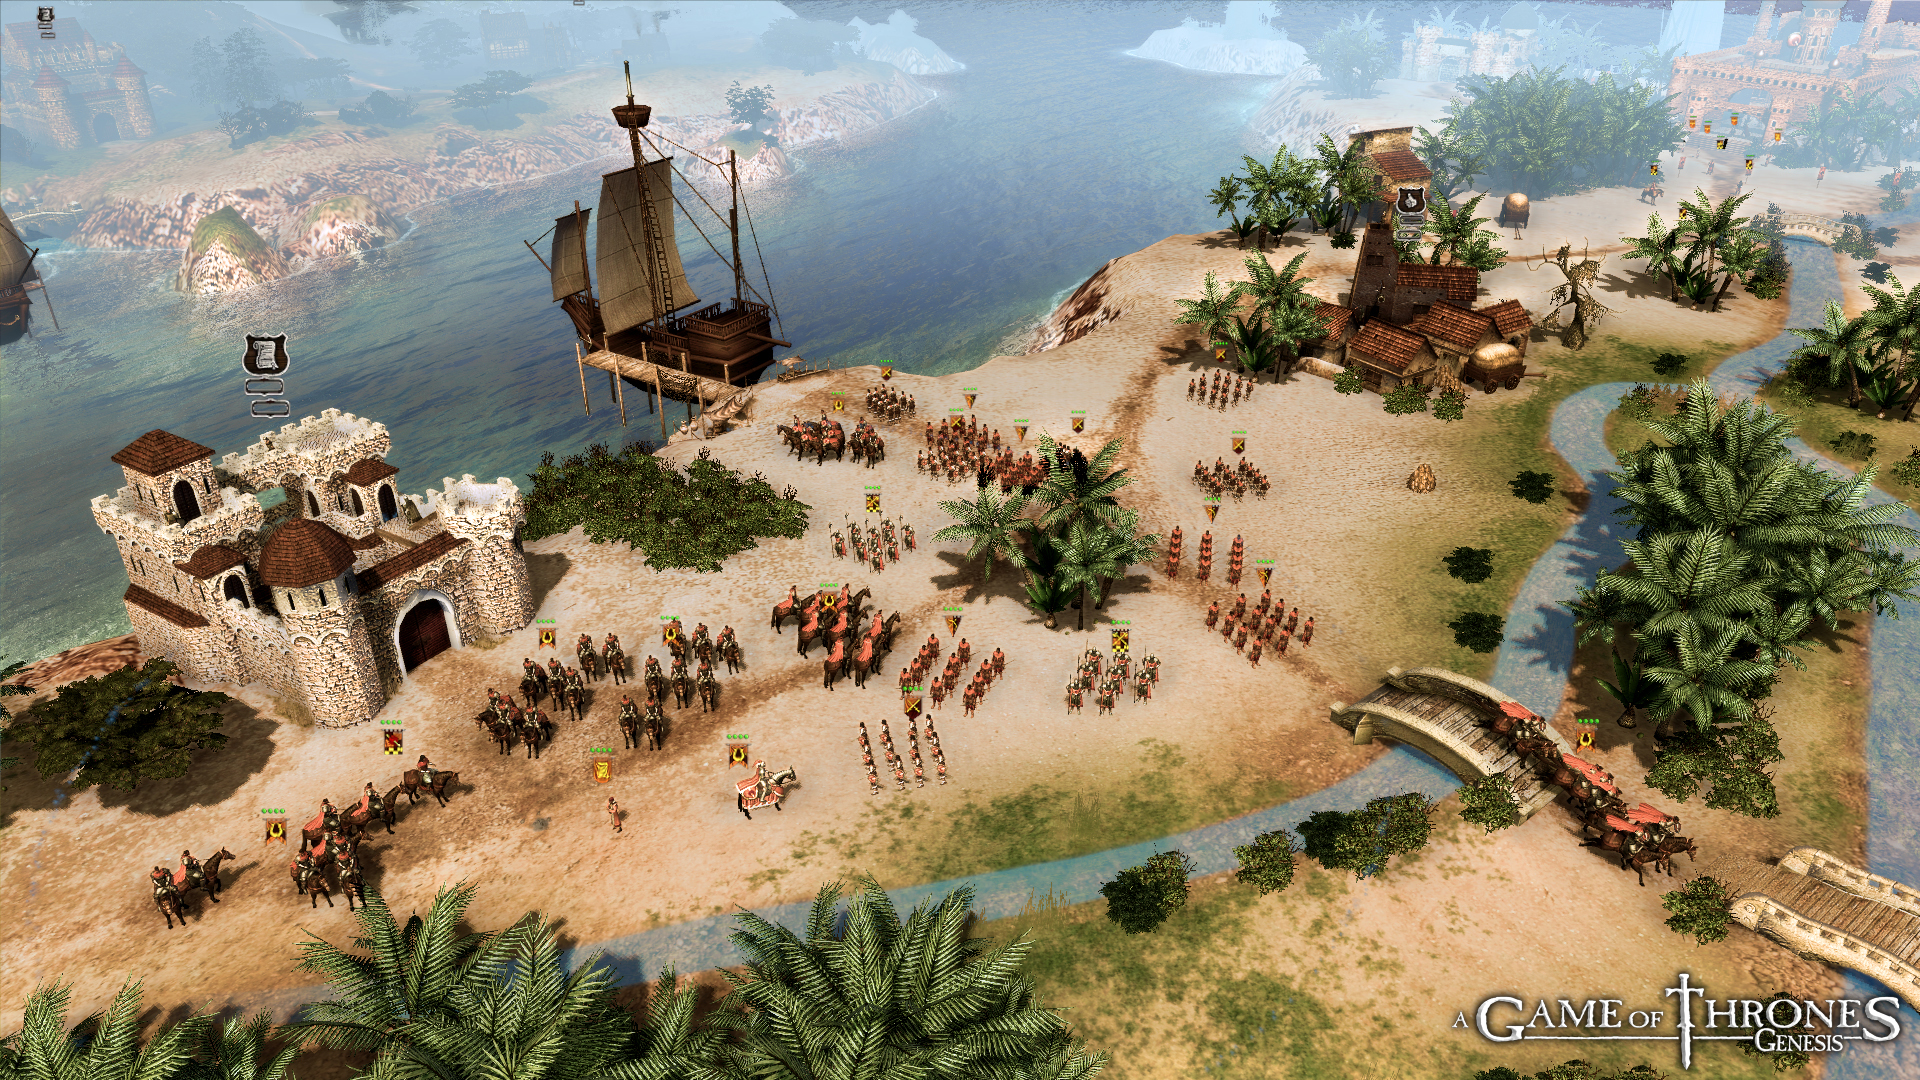 A Game of Thrones - Genesis screenshot